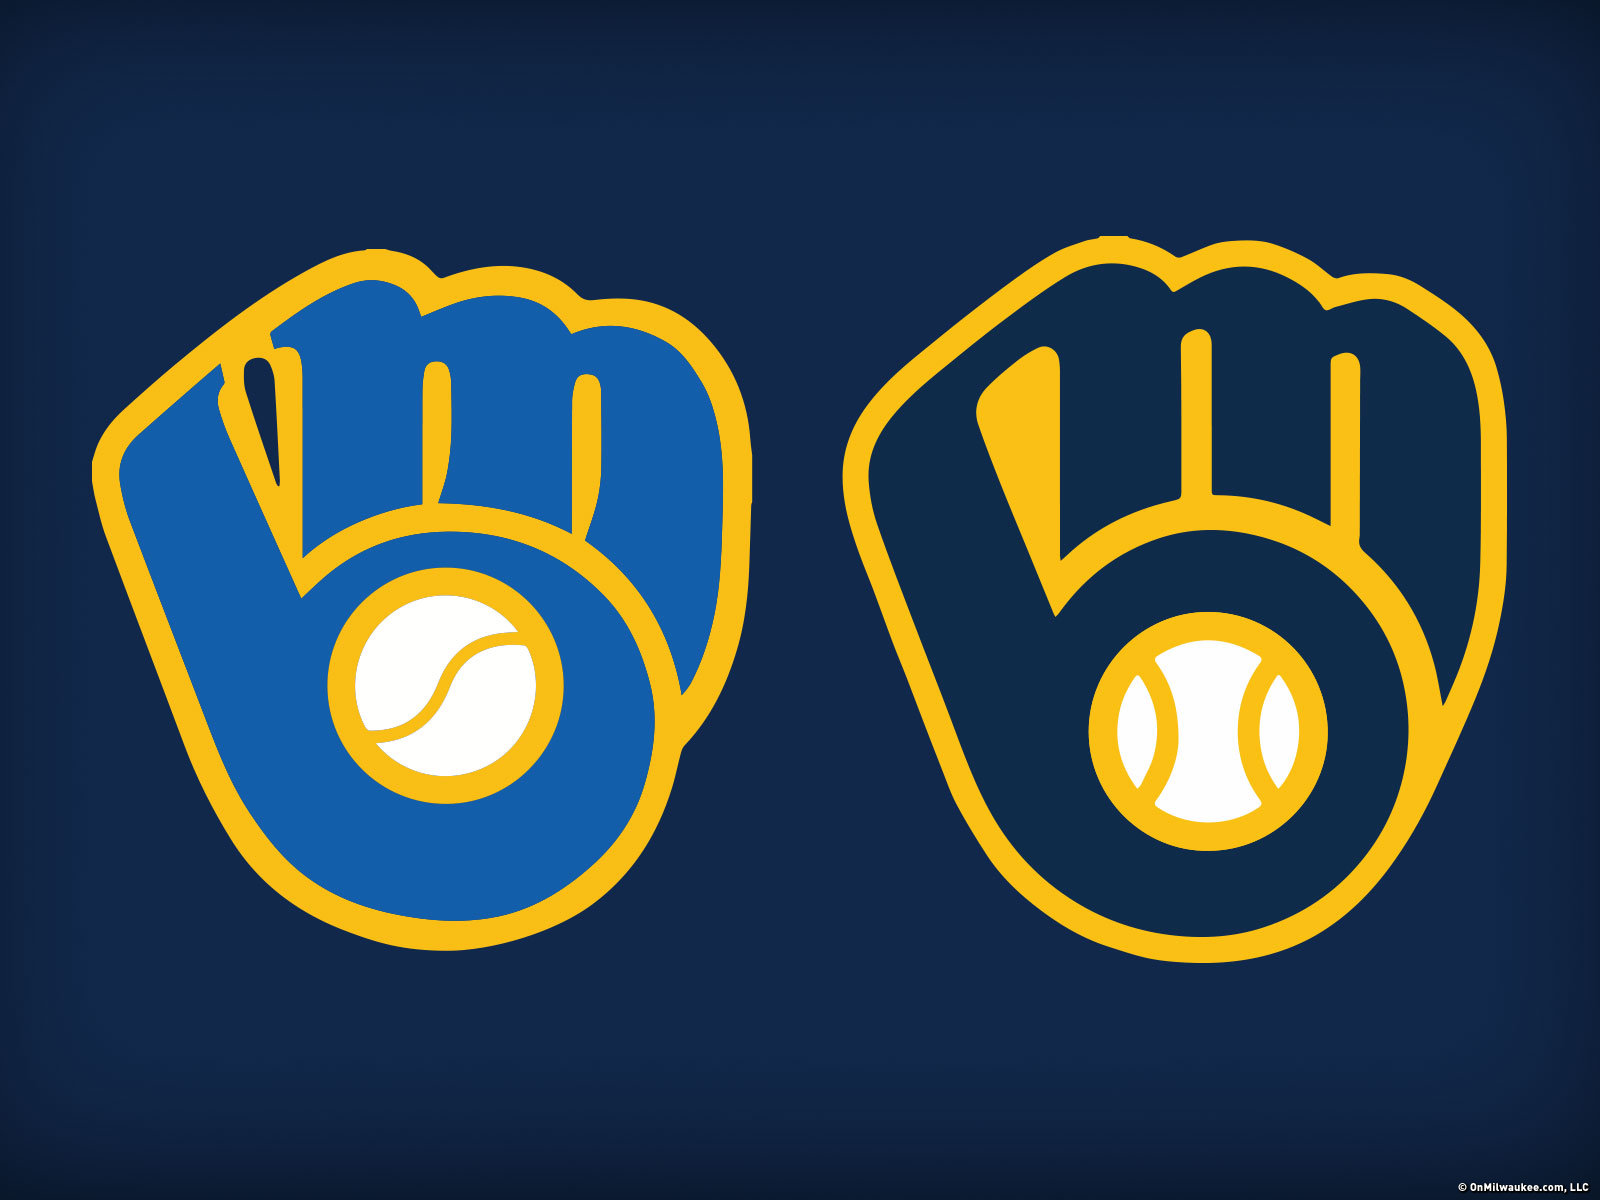 For 50th anniversary season, Brewers bring back popular glove logo, uniforms